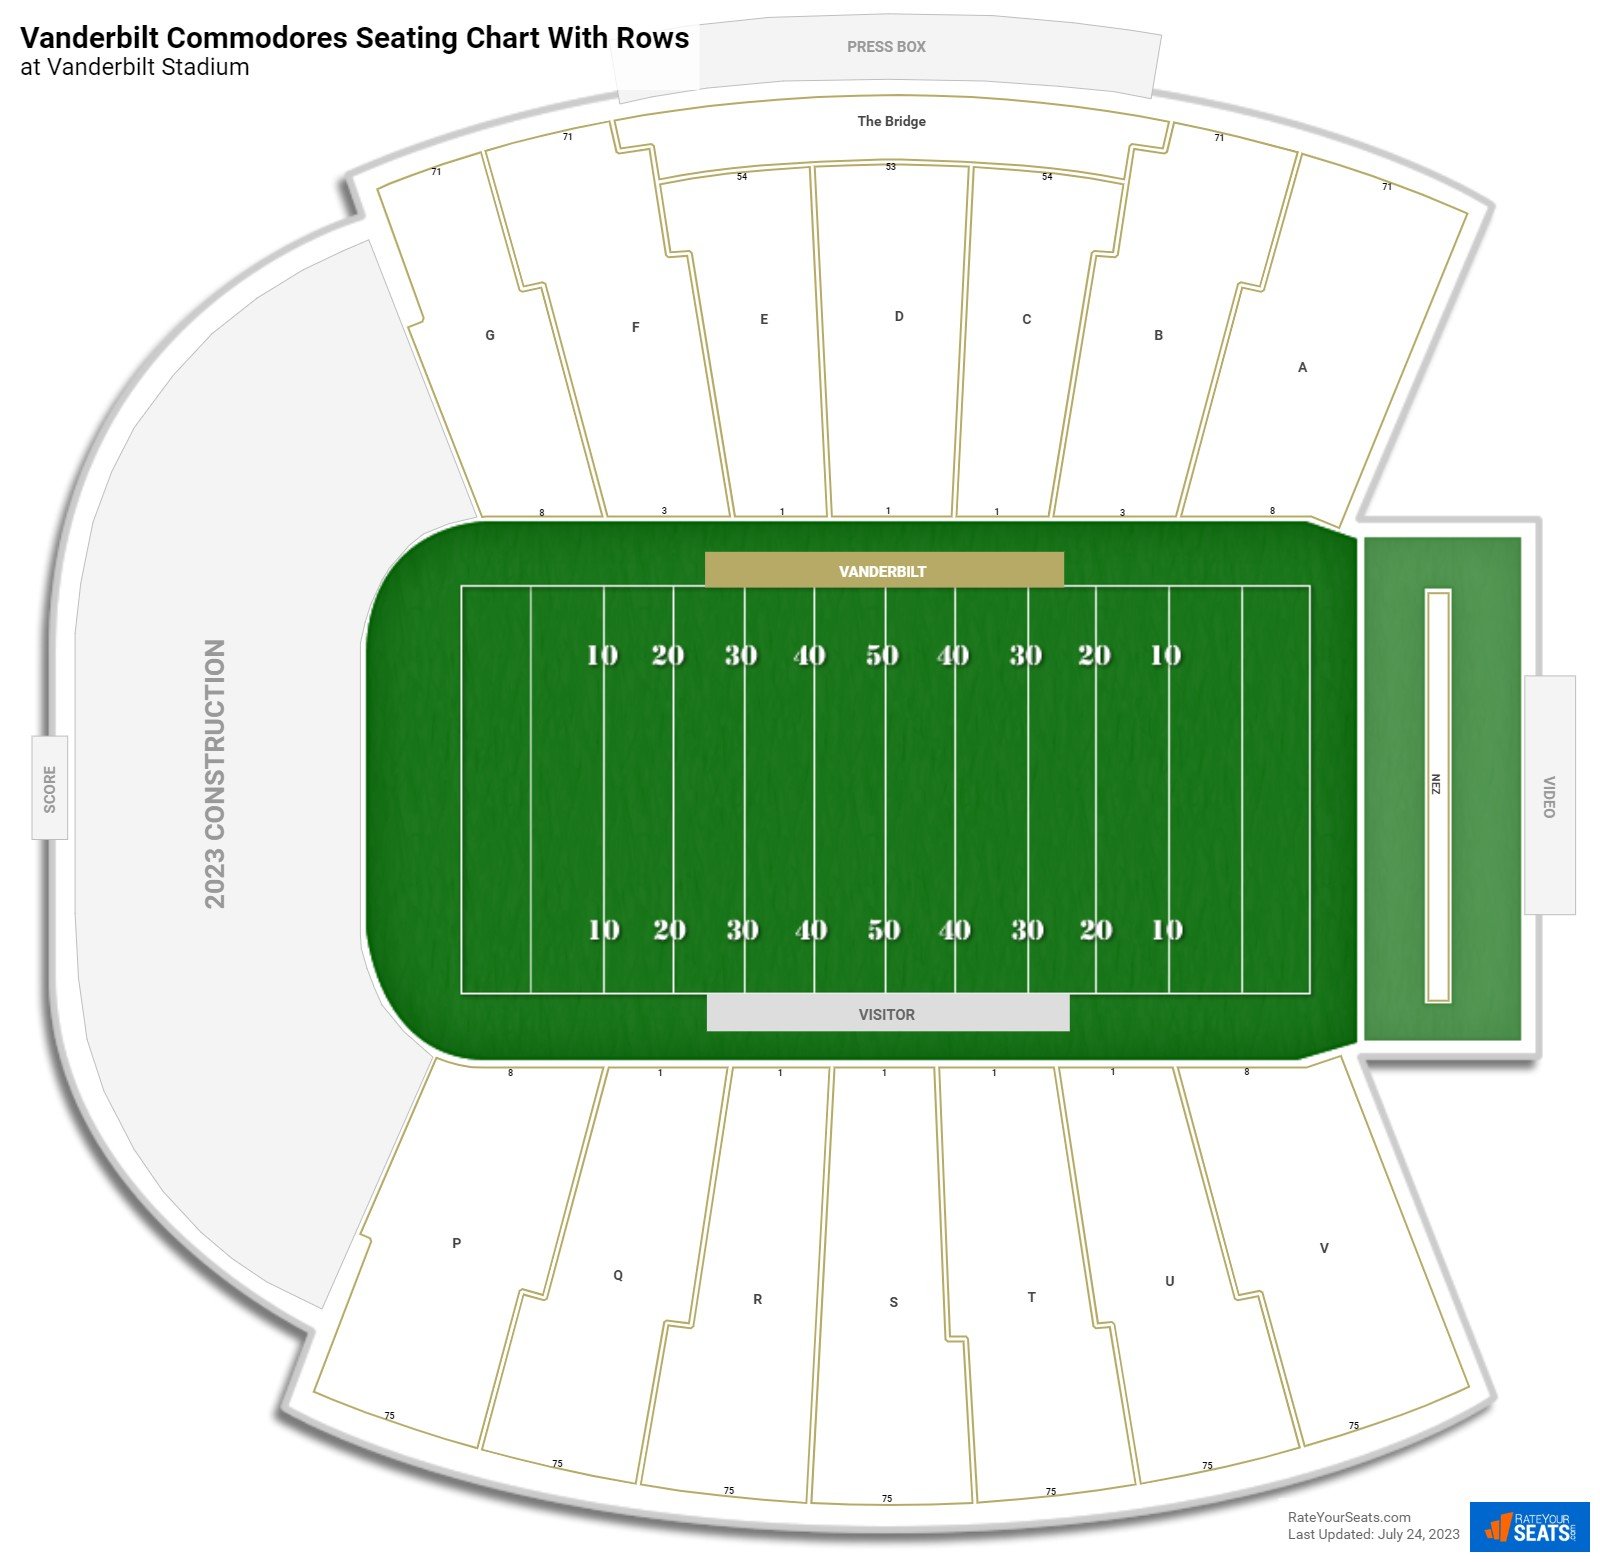 Vanderbilt Stadium seating chart with row numbers